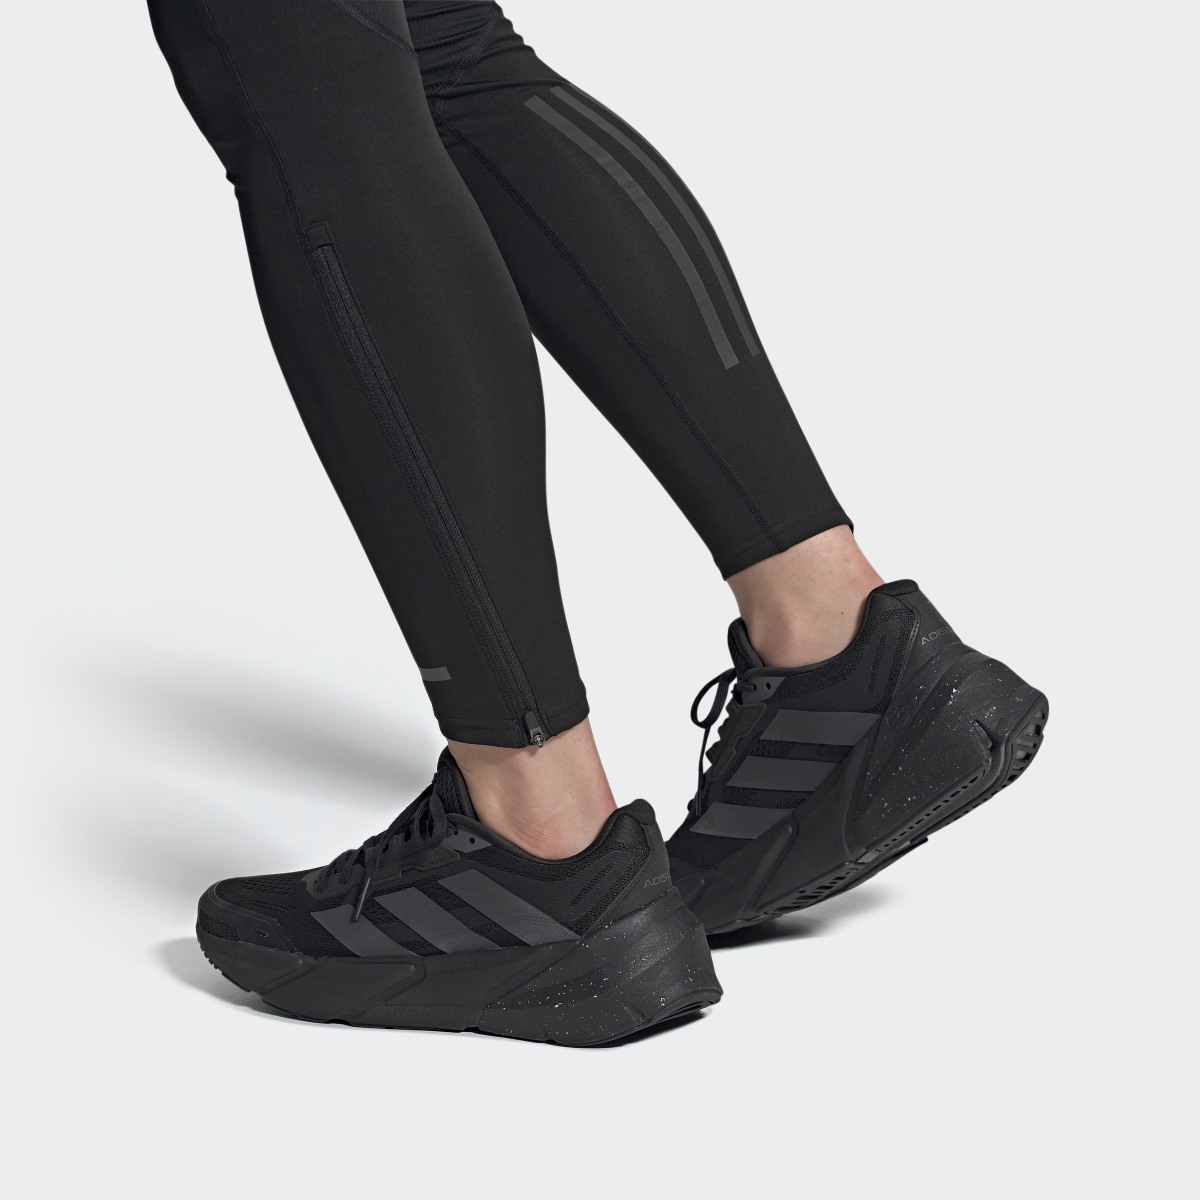 Adidas Adistar Running Shoes. 5